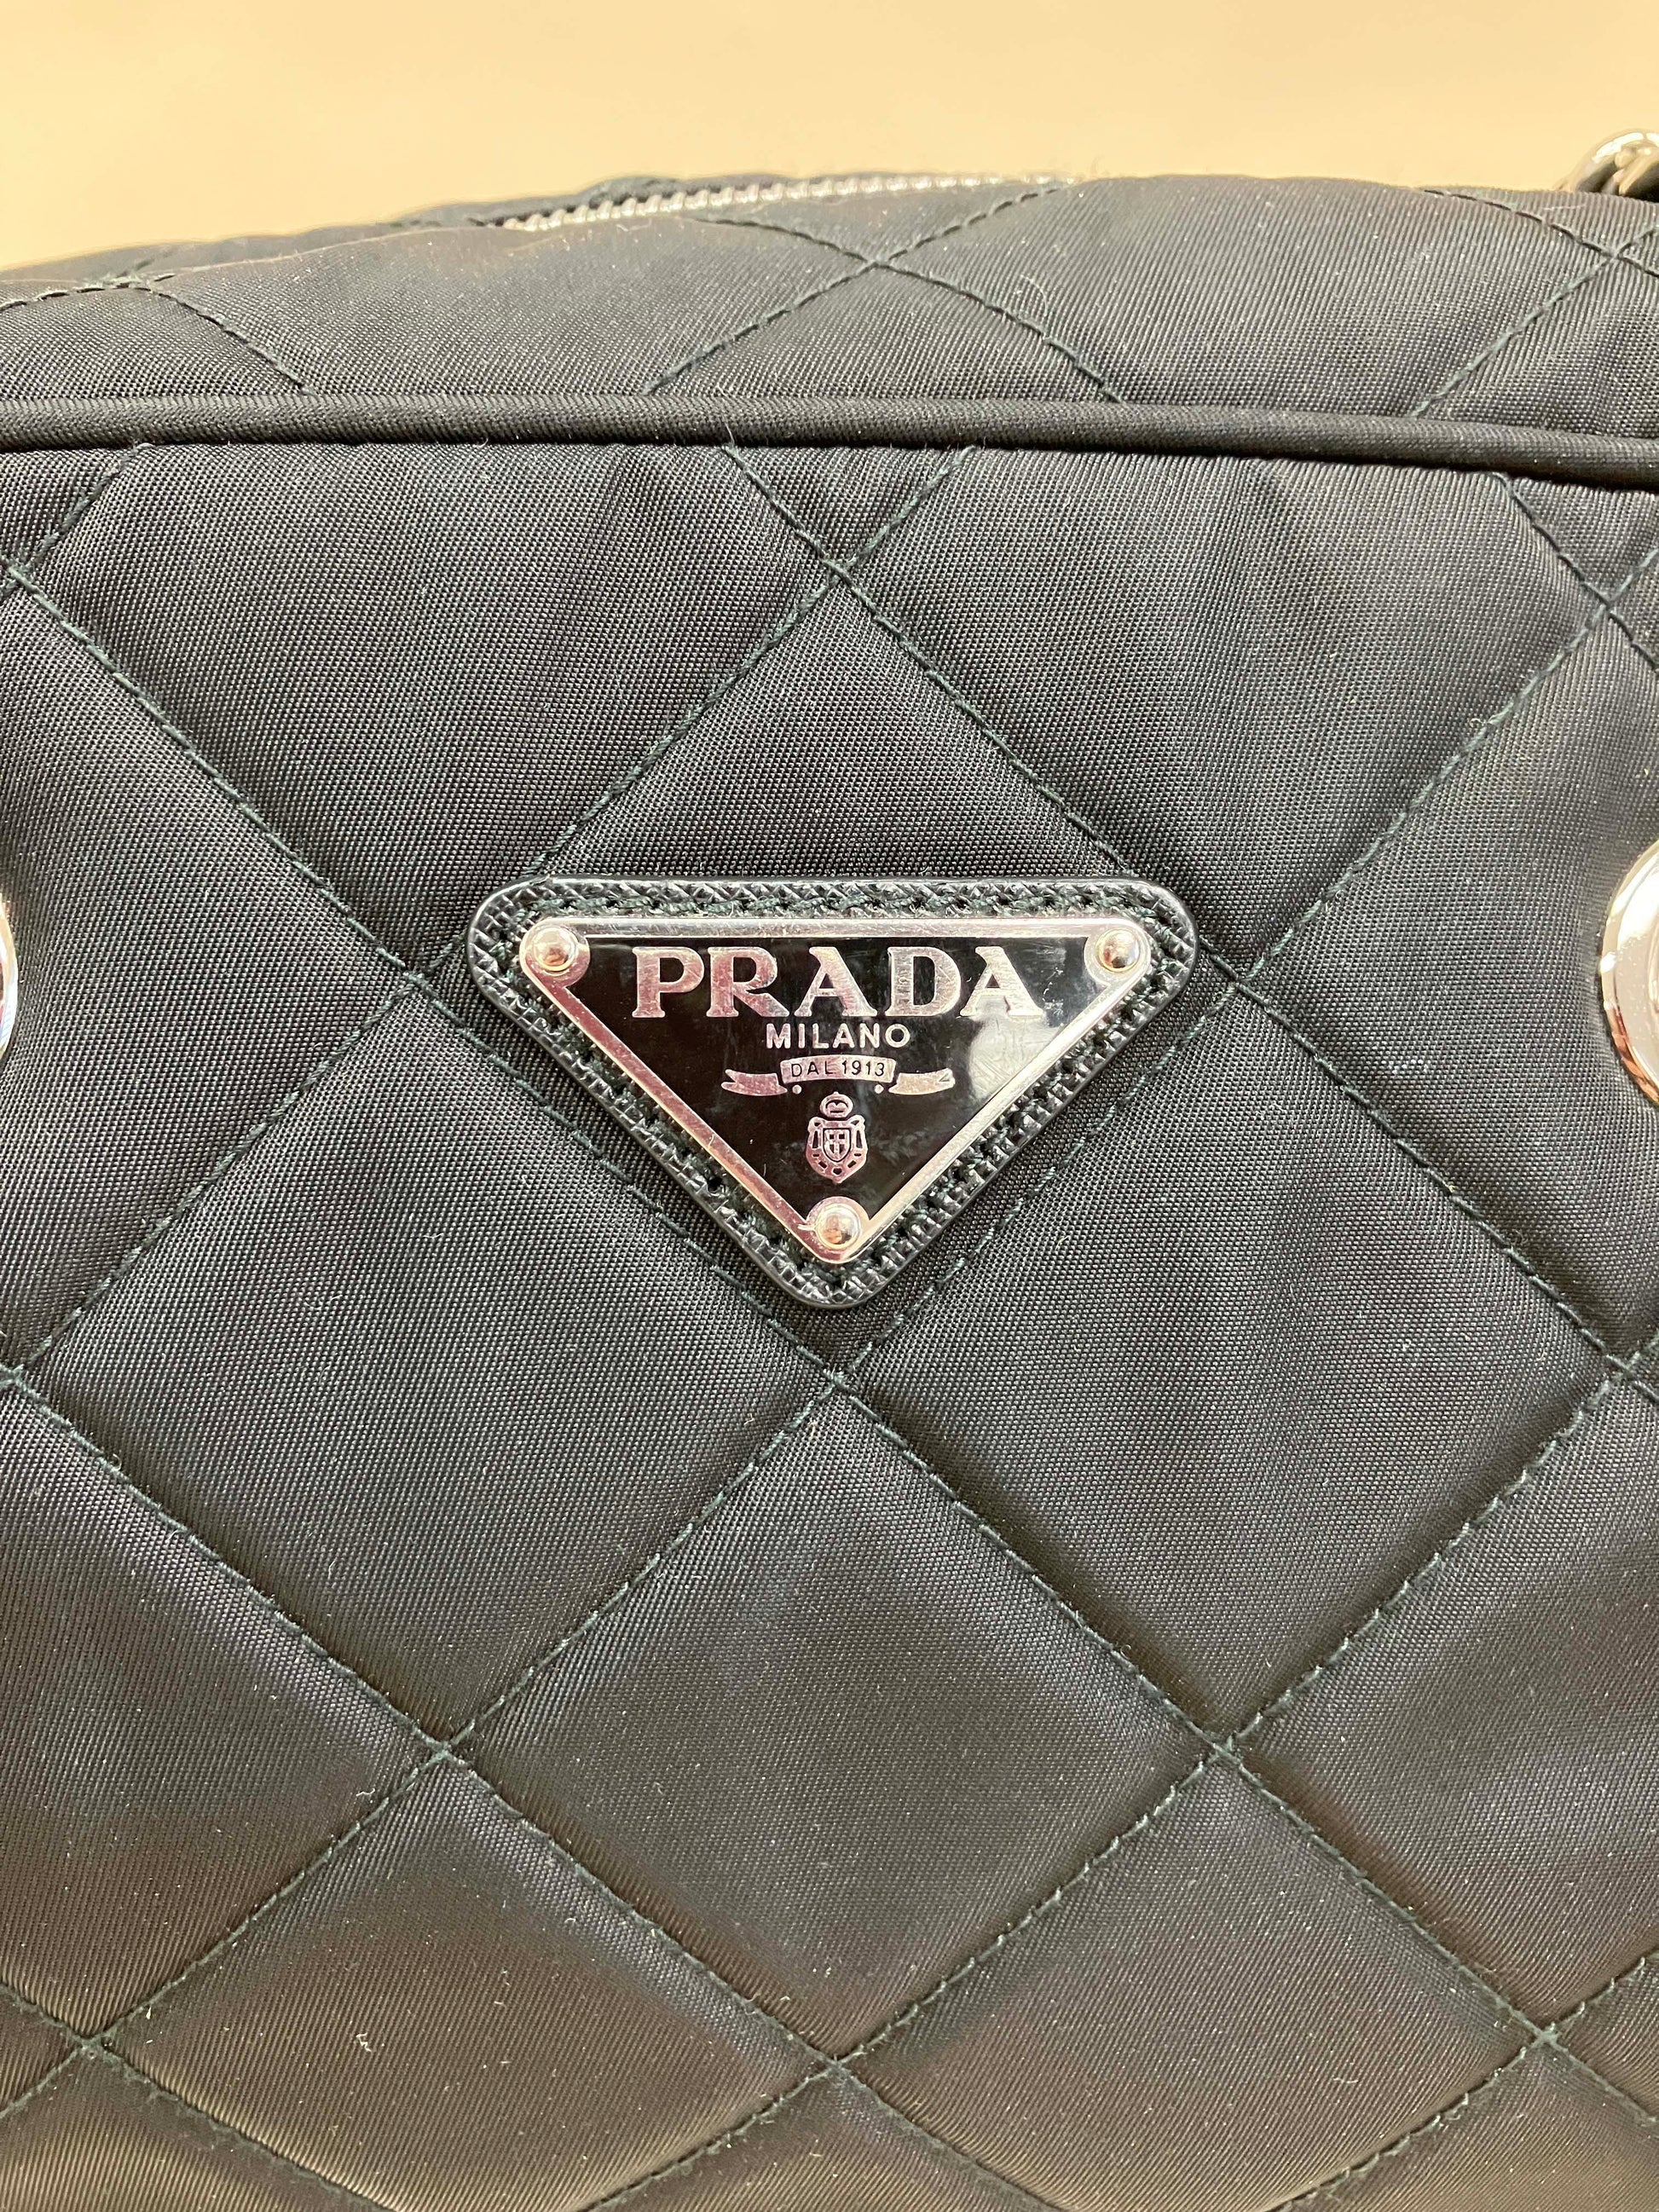 prada shoulder bag with chain